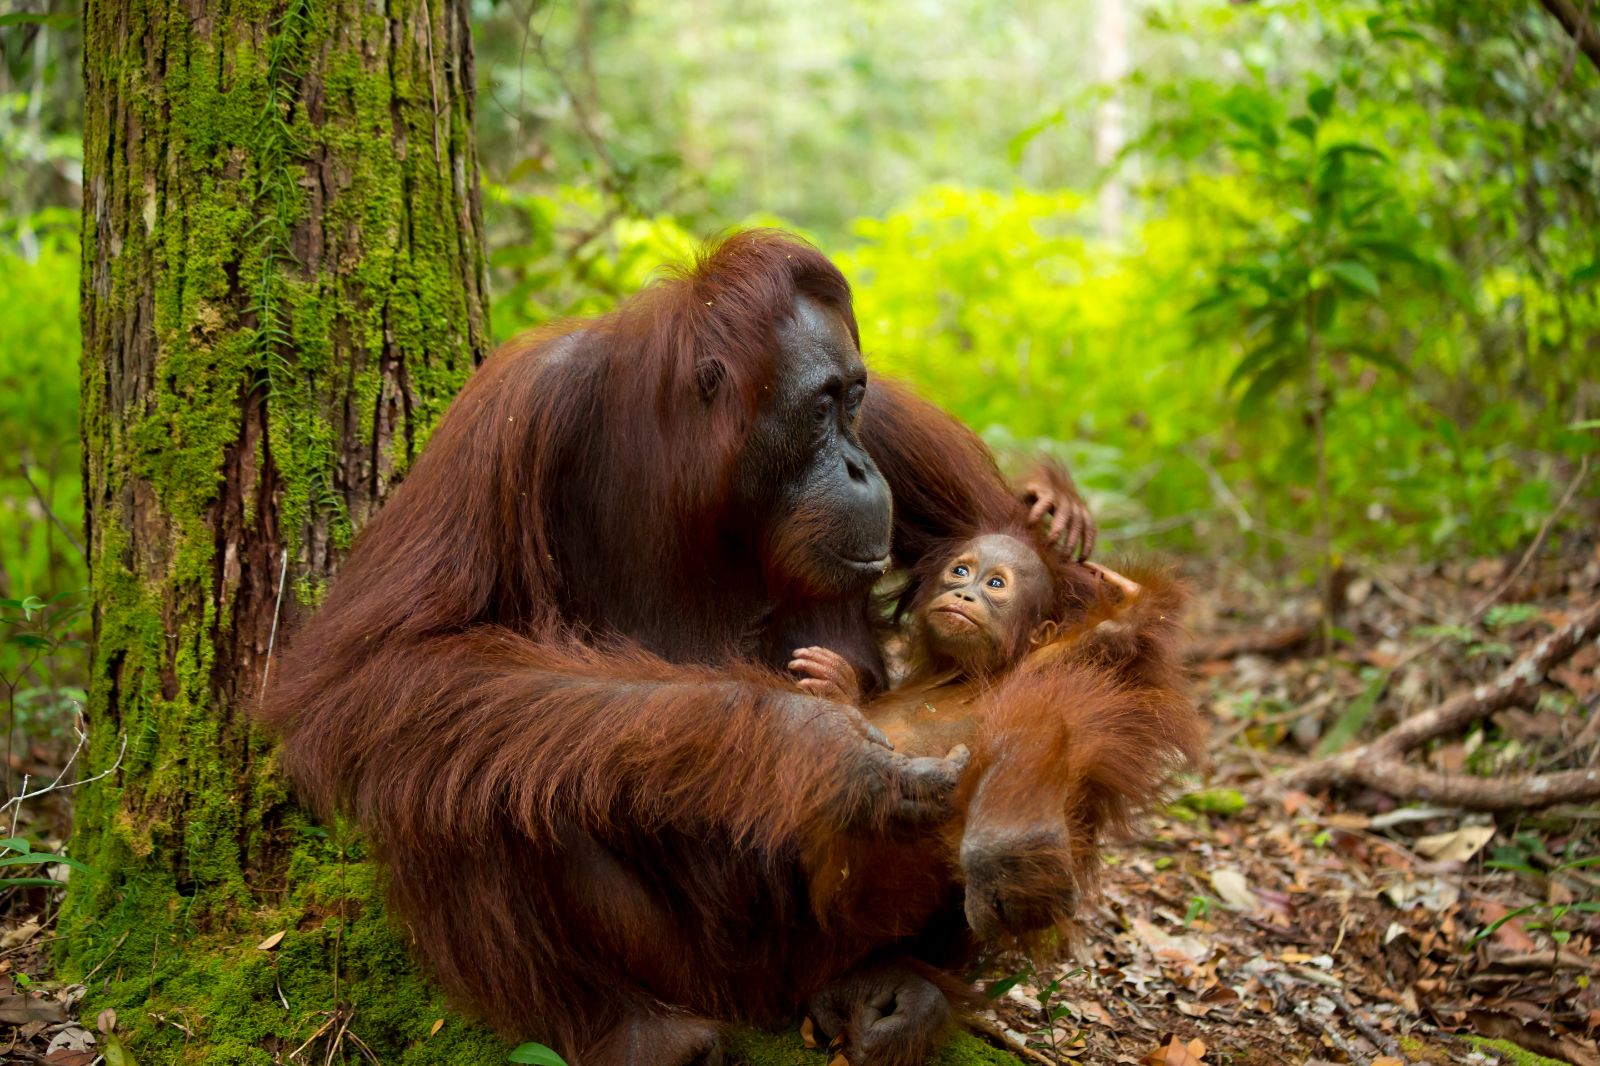 Mother and baby orangutan in Borneo, Malaysia